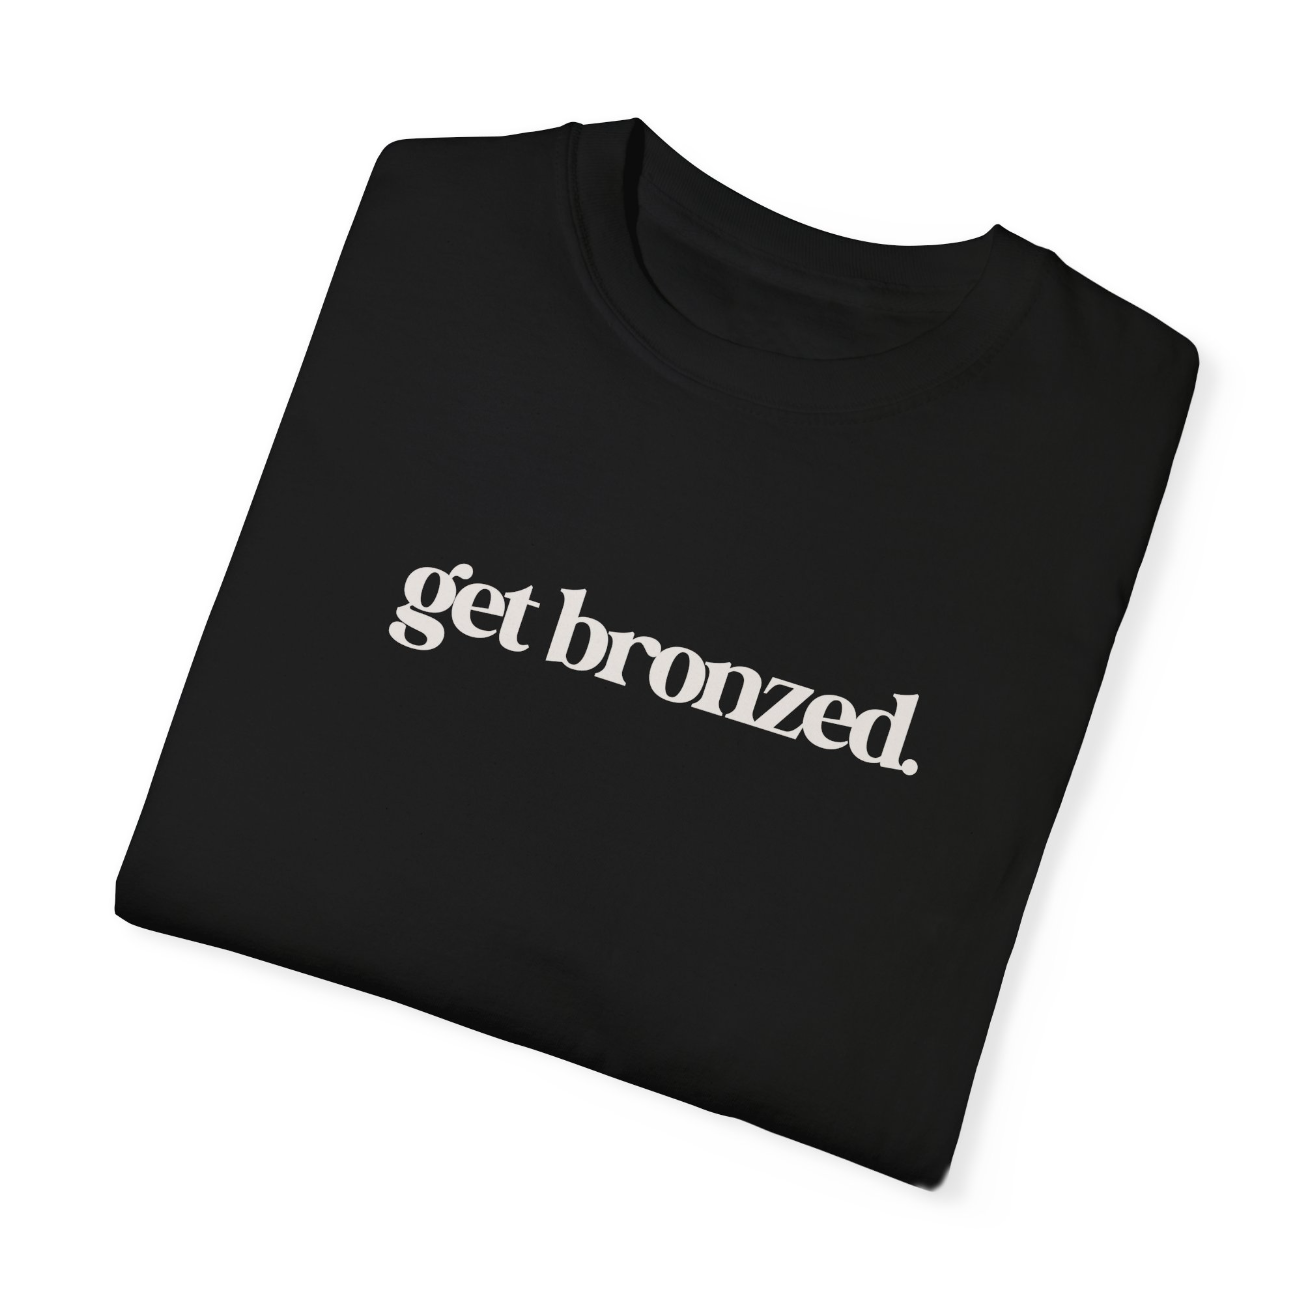 Get Bronzed T-shirt